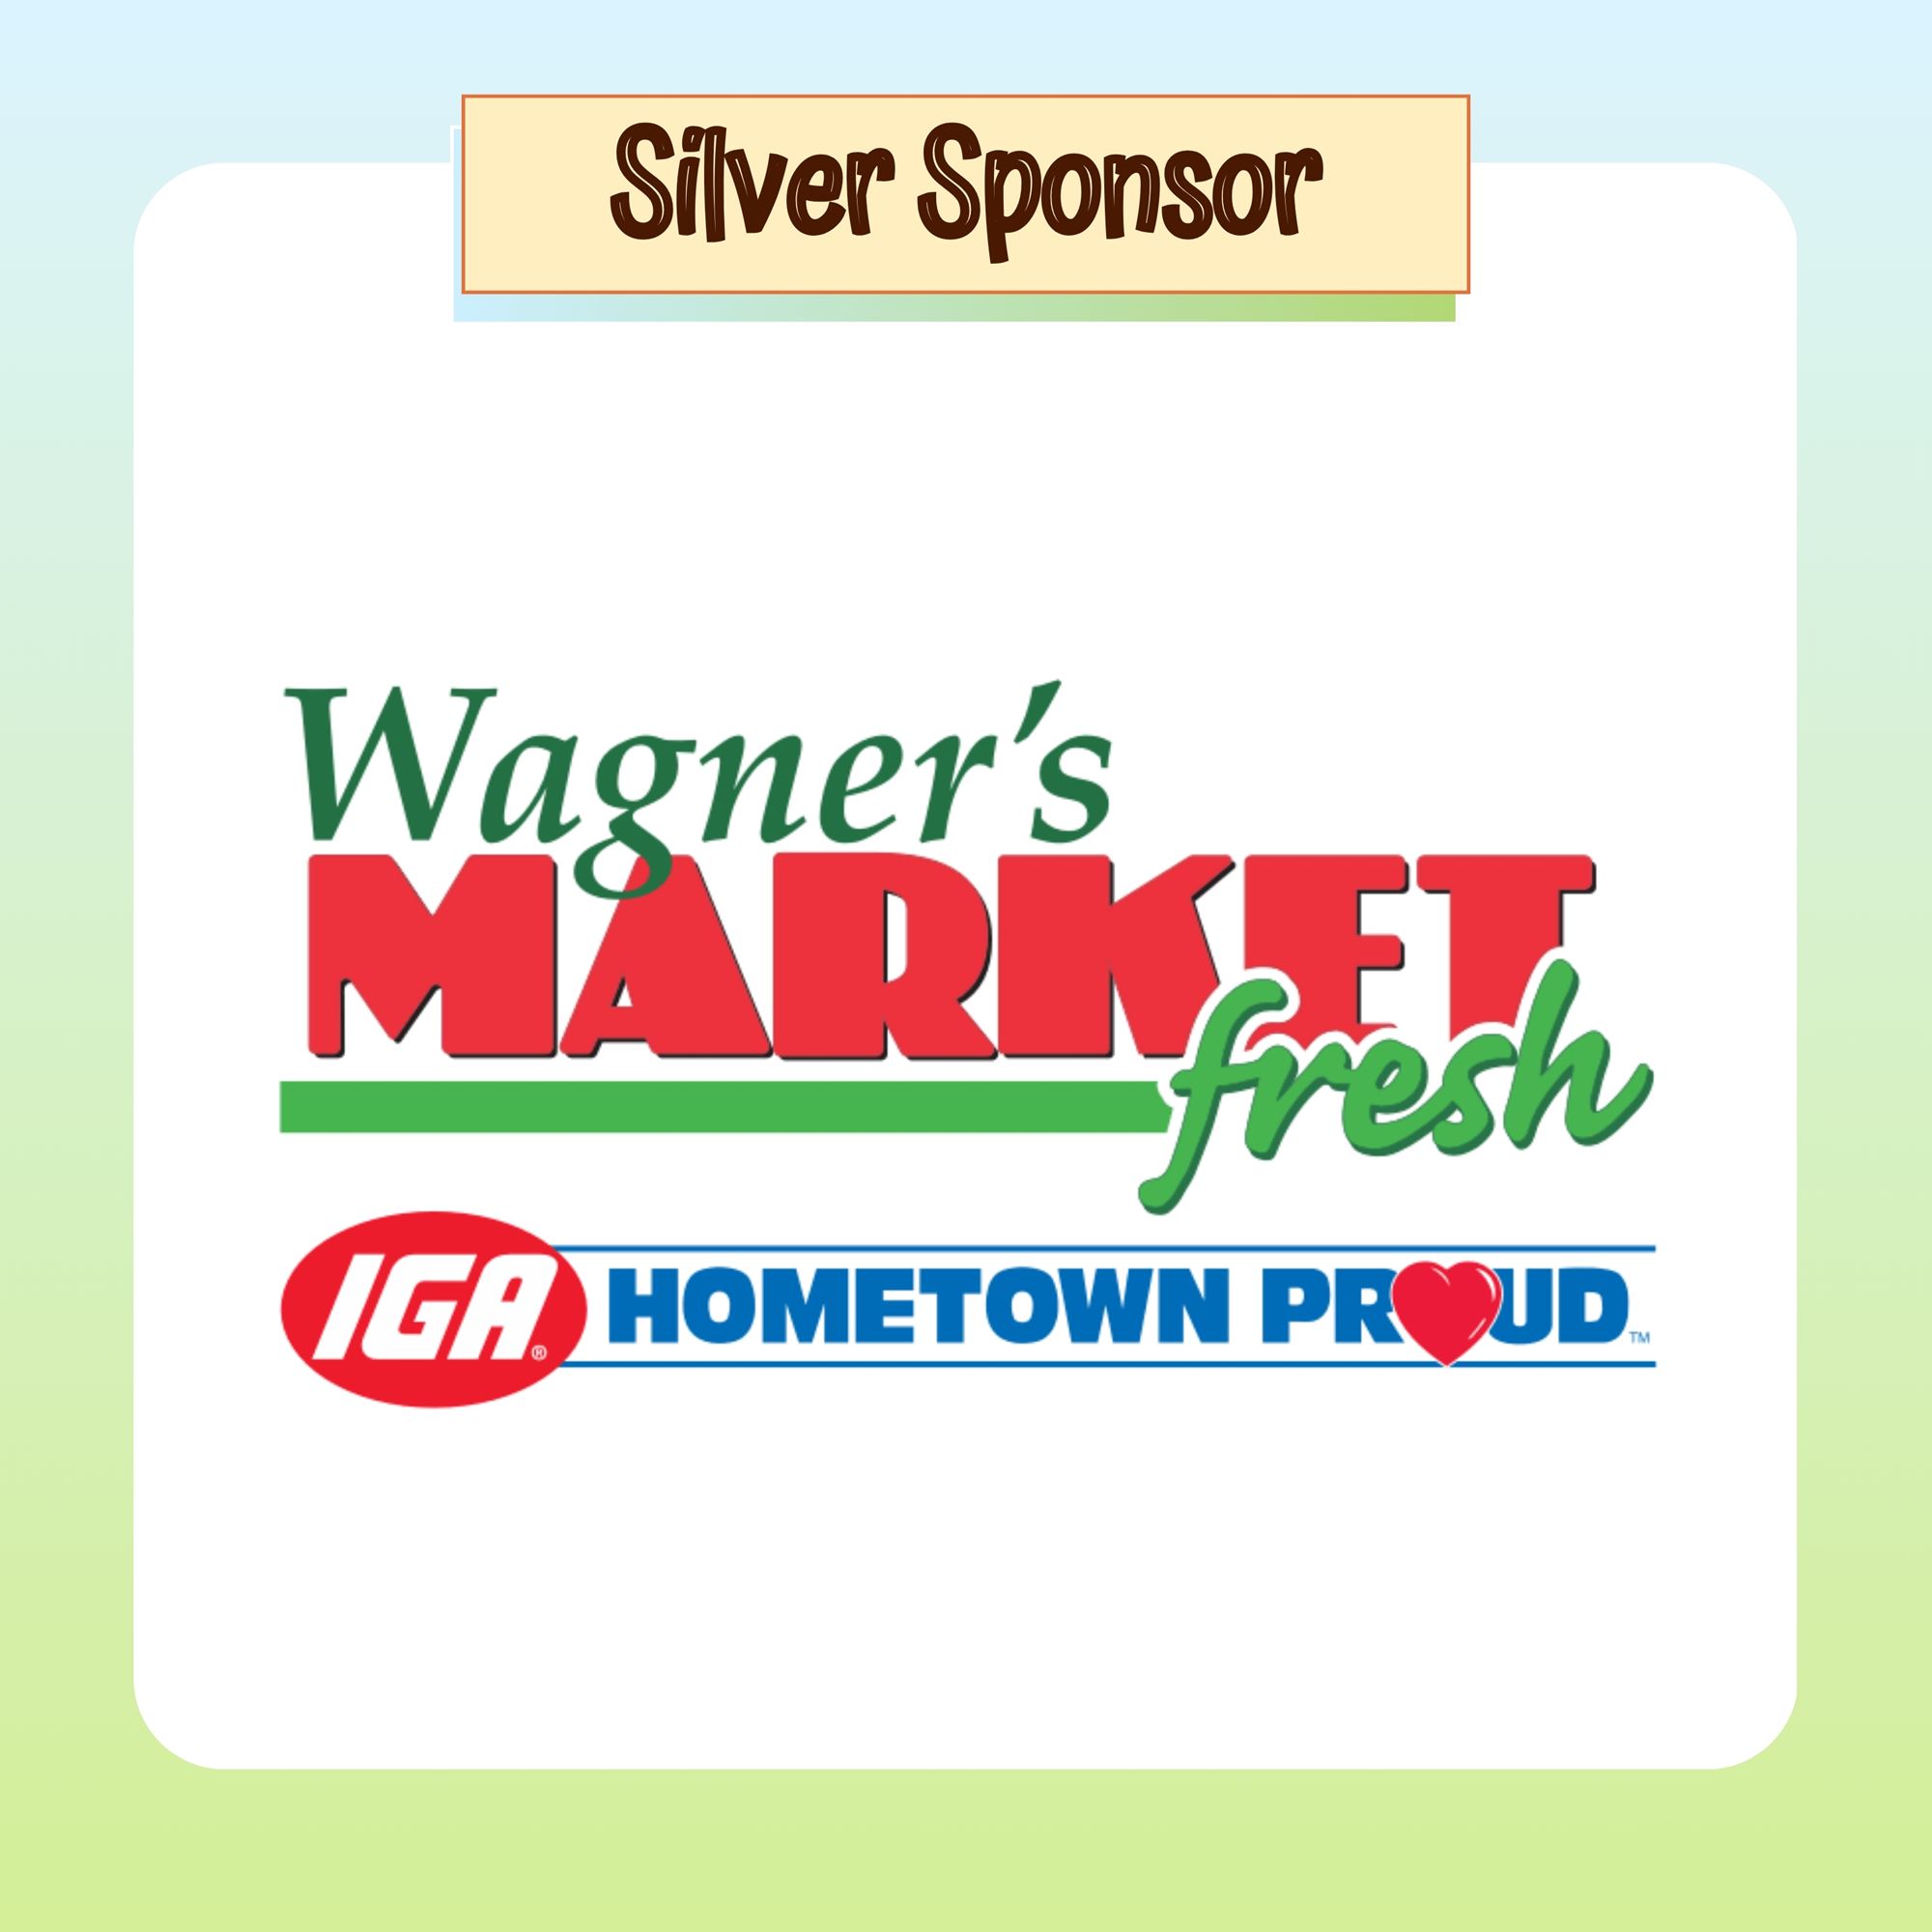 Silver Sponsor: Wagner's Market